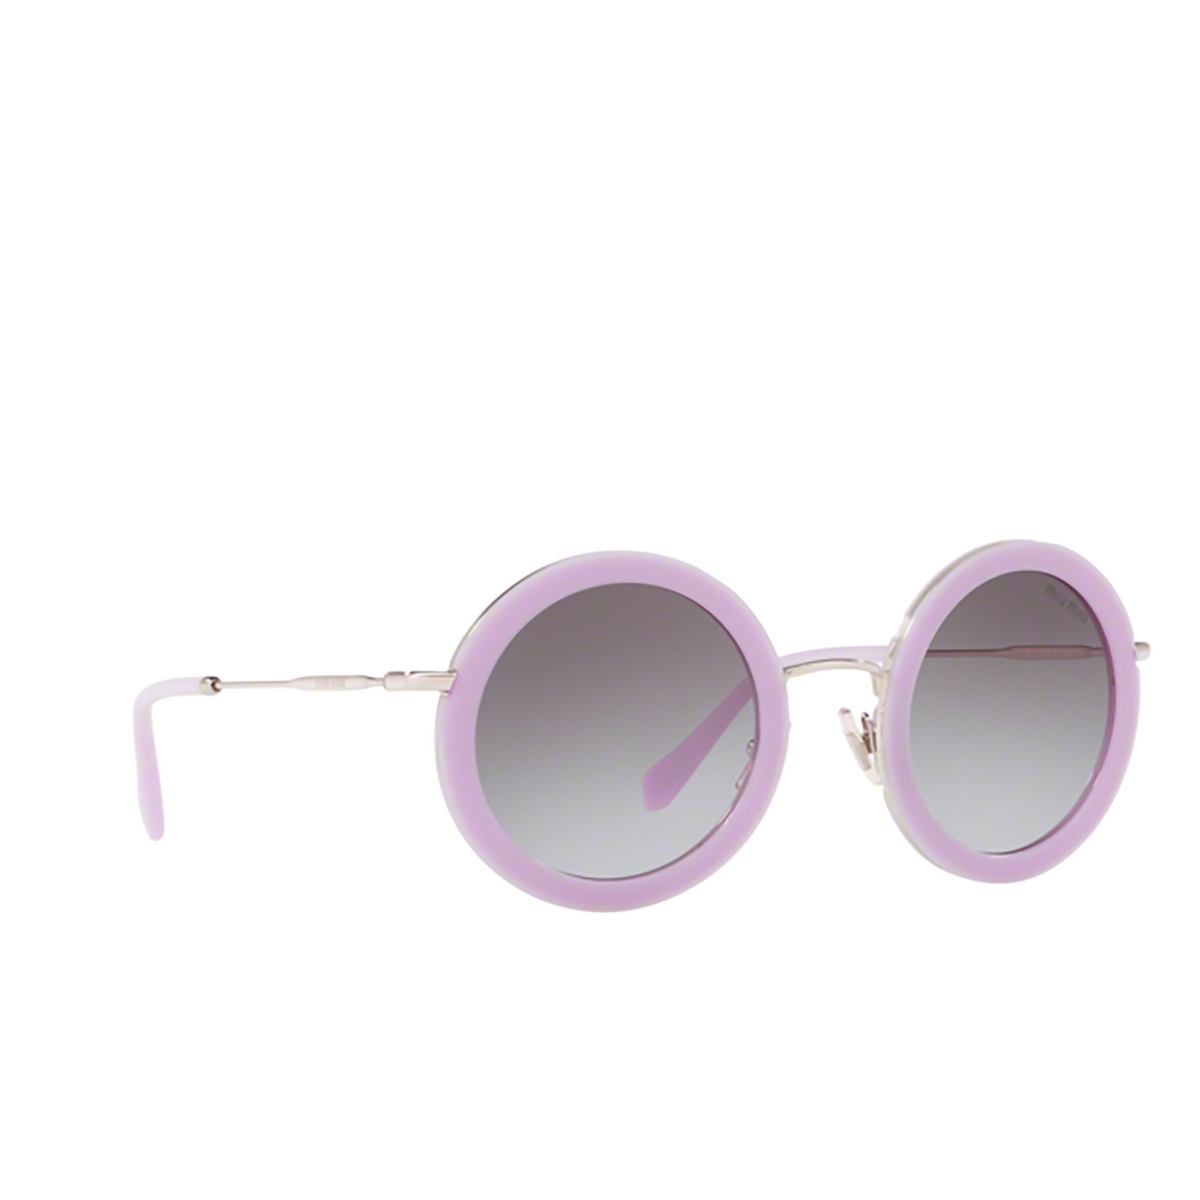 Miu Miu® Sunglasses: MU 59US color Opal Lilac 1363E2 - front view.